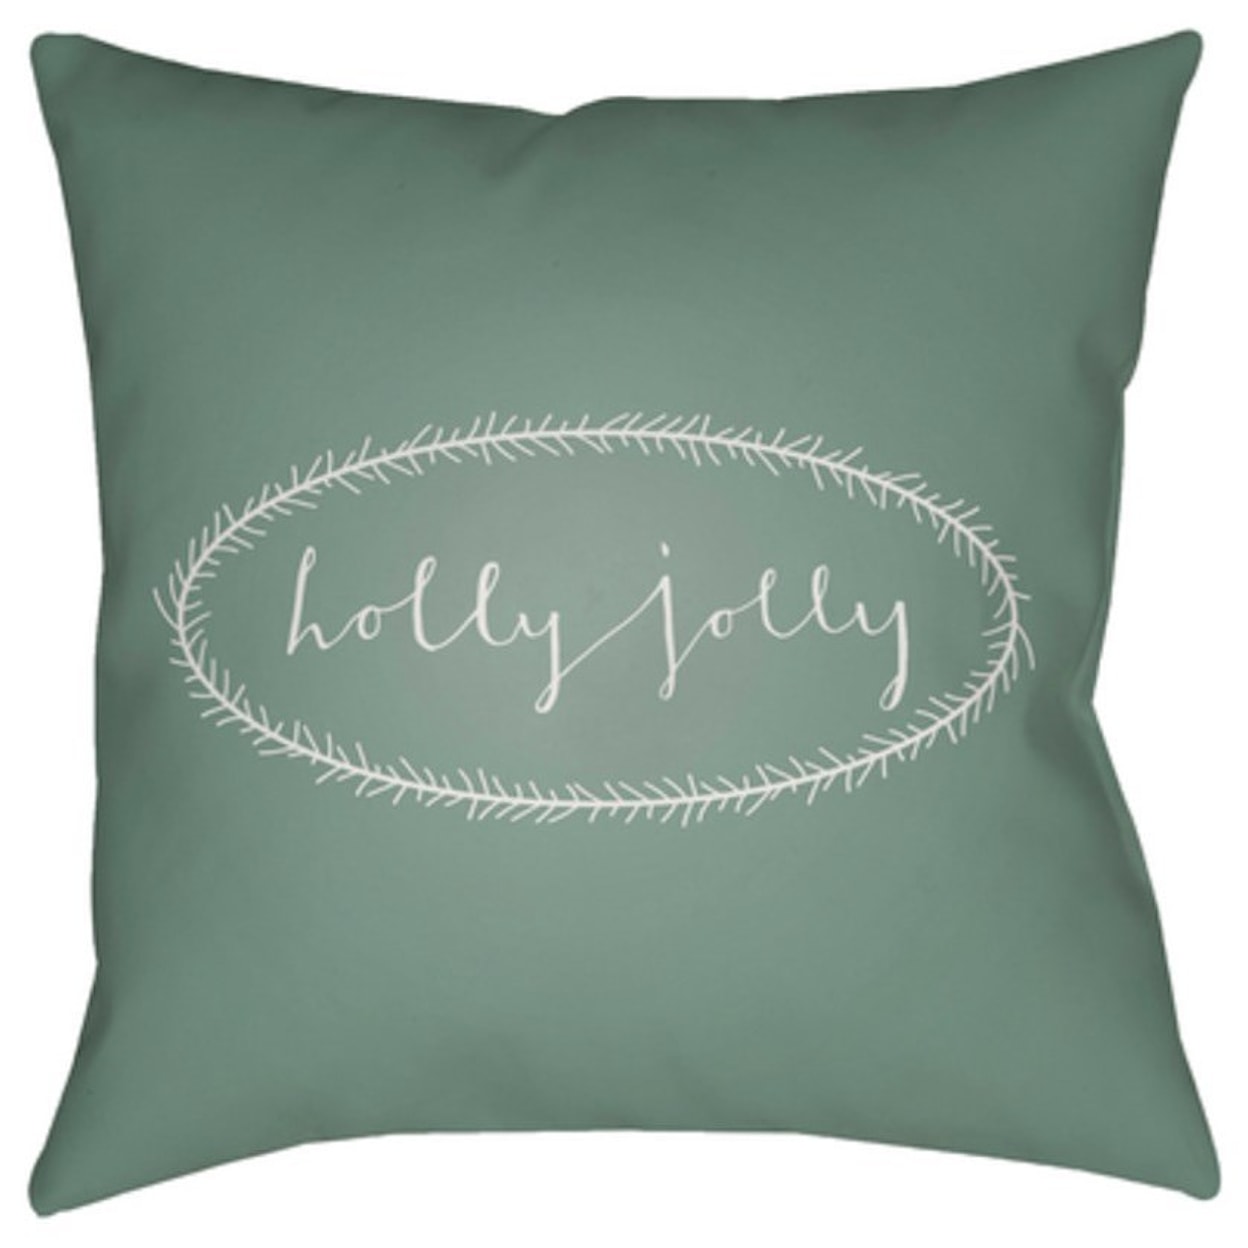 Surya Holly Jolly Pillow